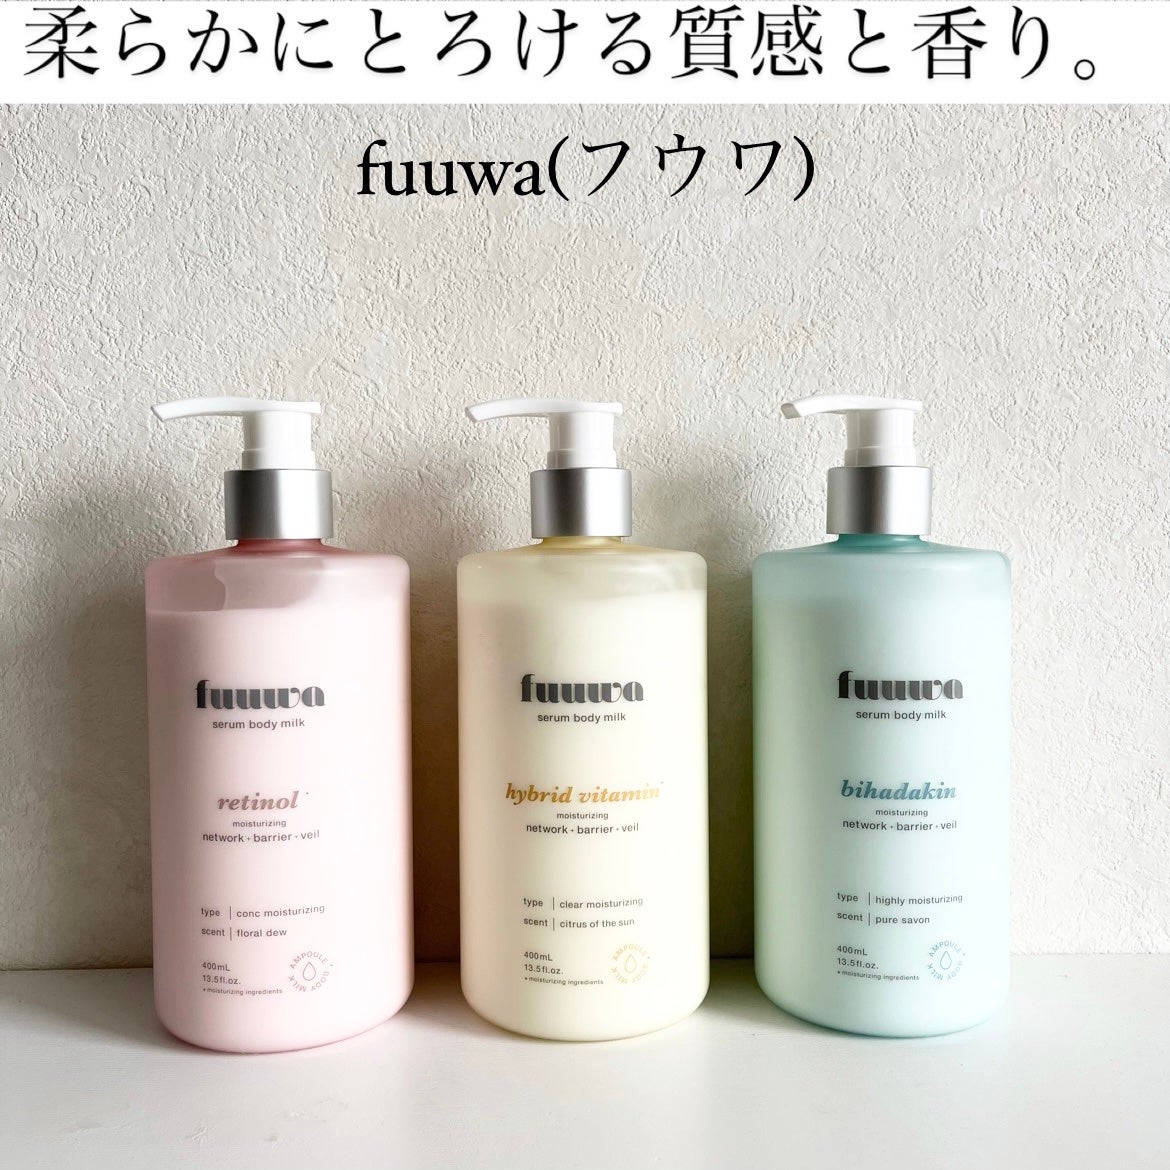 fuuwaのボディミルク 美容液ボディミルク レチノール他、3商品を使った